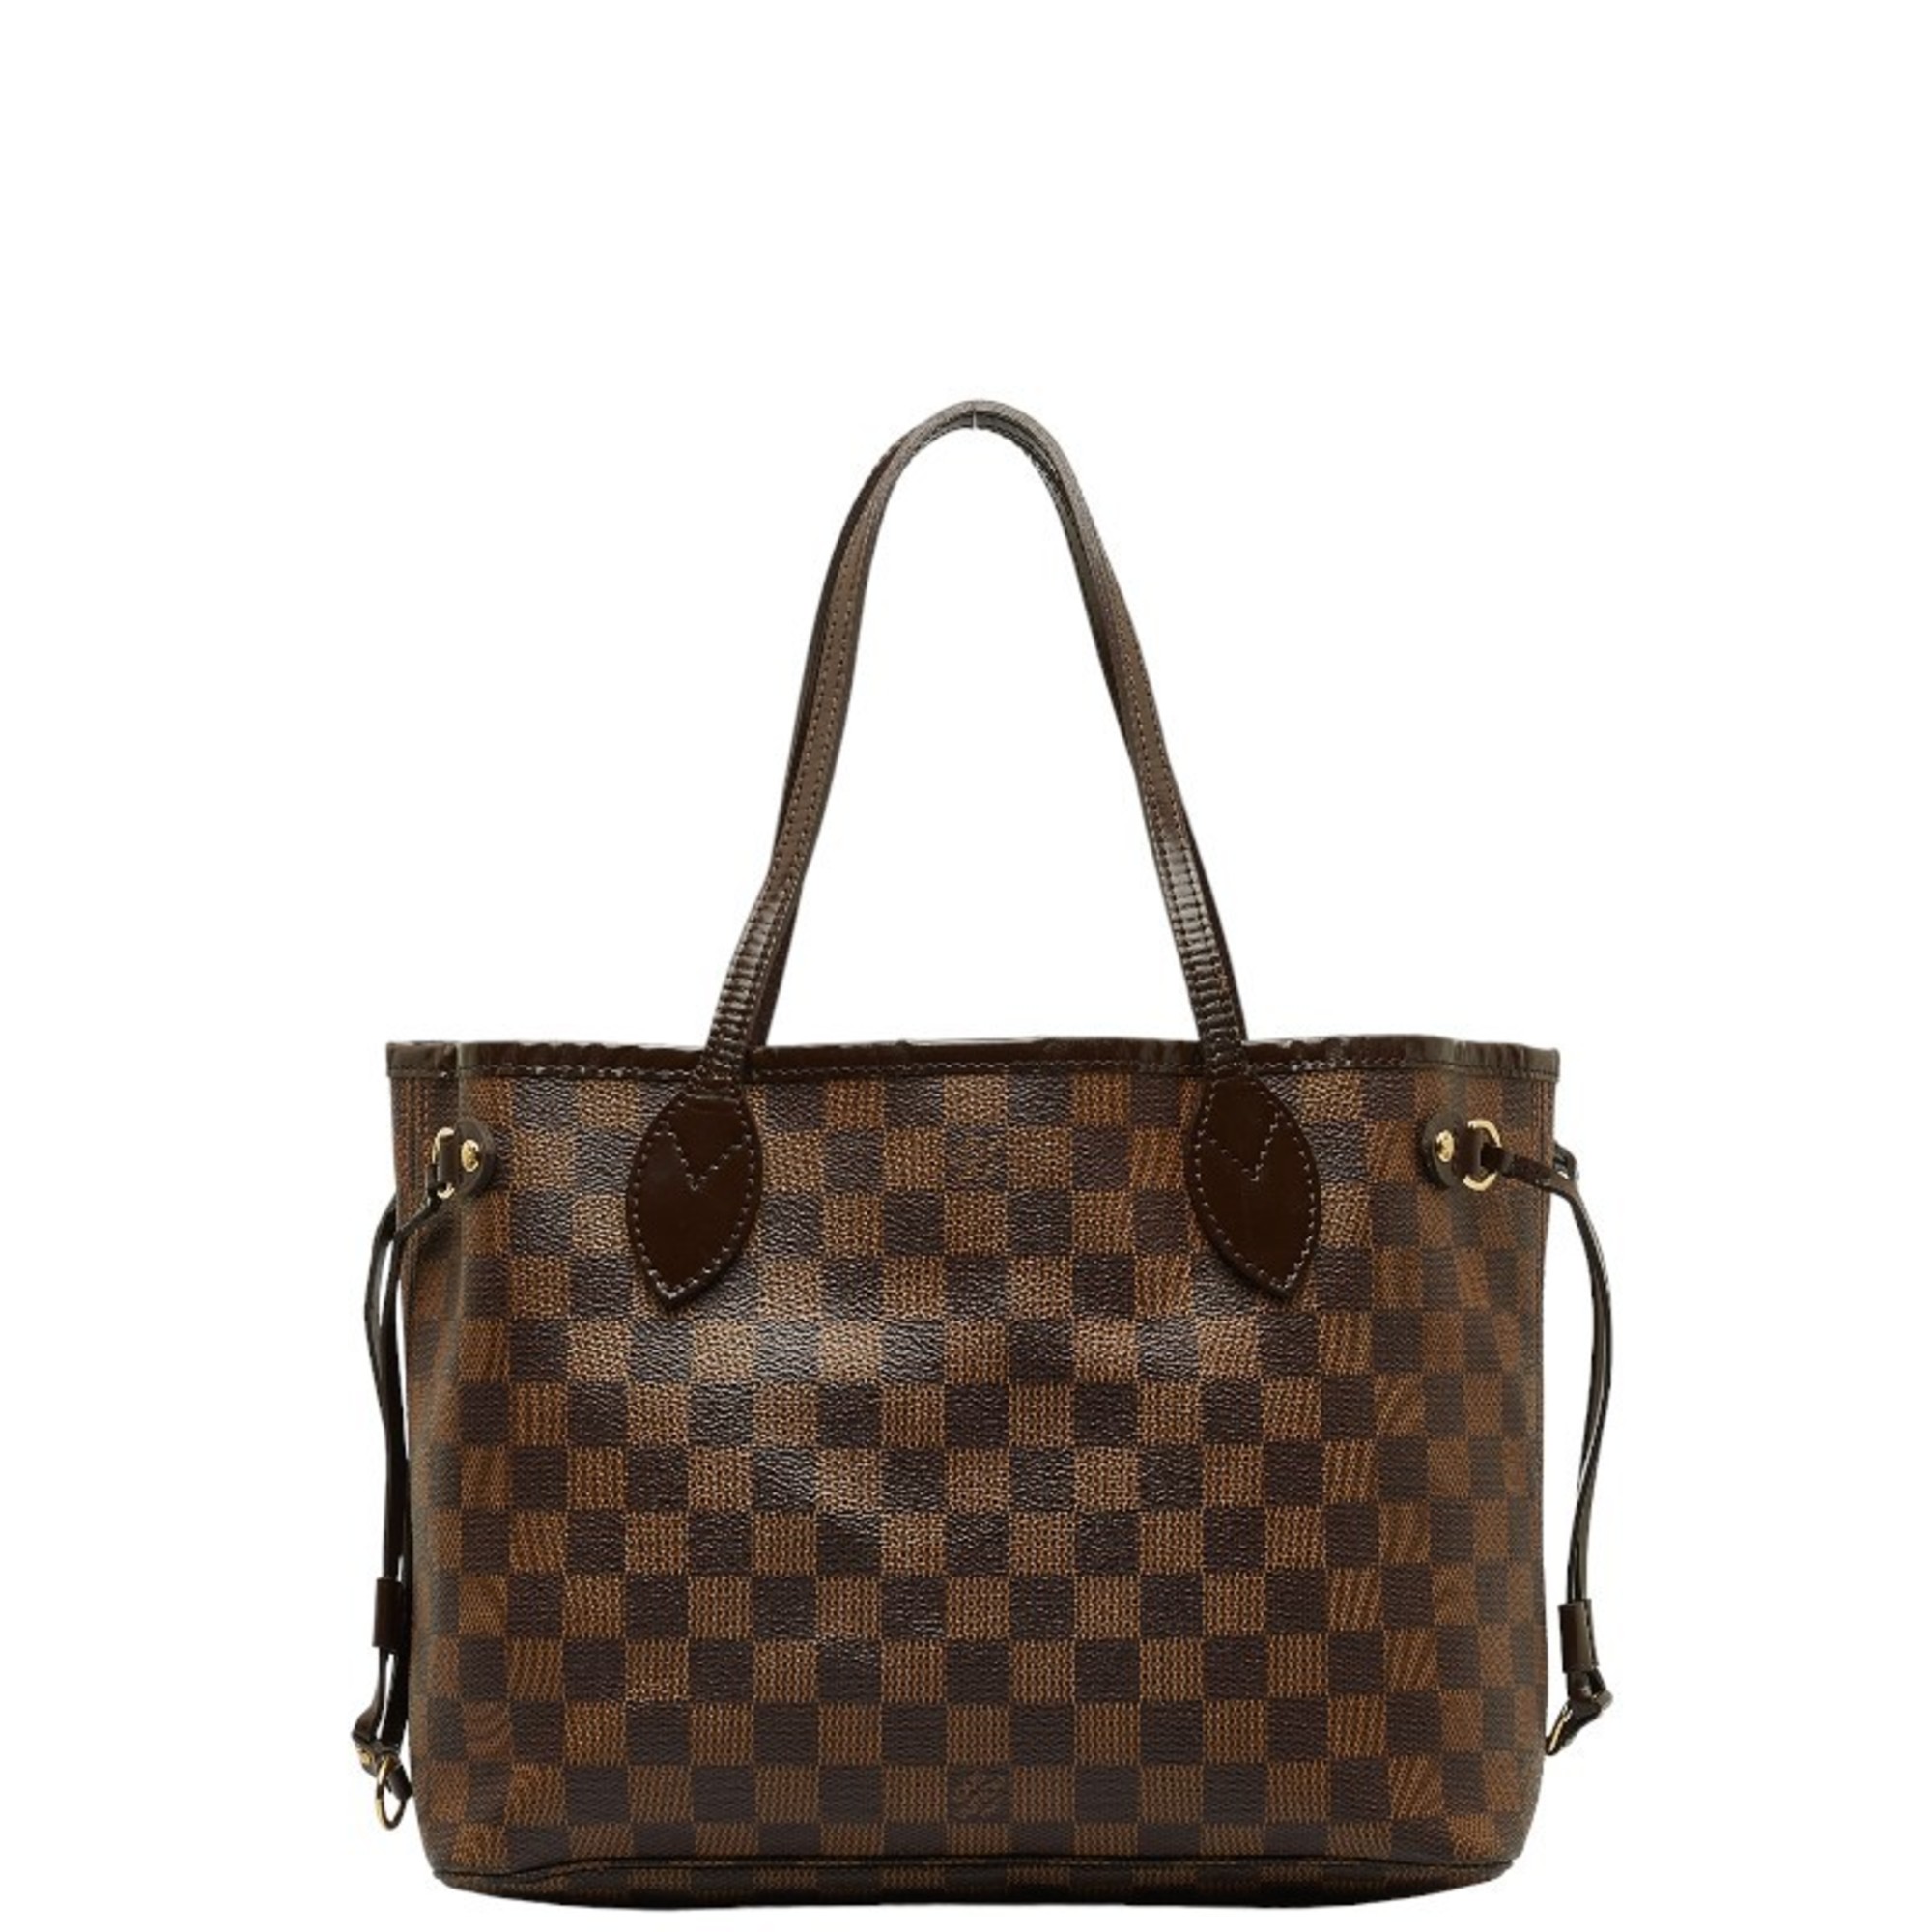 Louis Vuitton Damier Neverfull PM Handbag Tote Bag N51109 Brown PVC Leather Women's LOUIS VUITTON